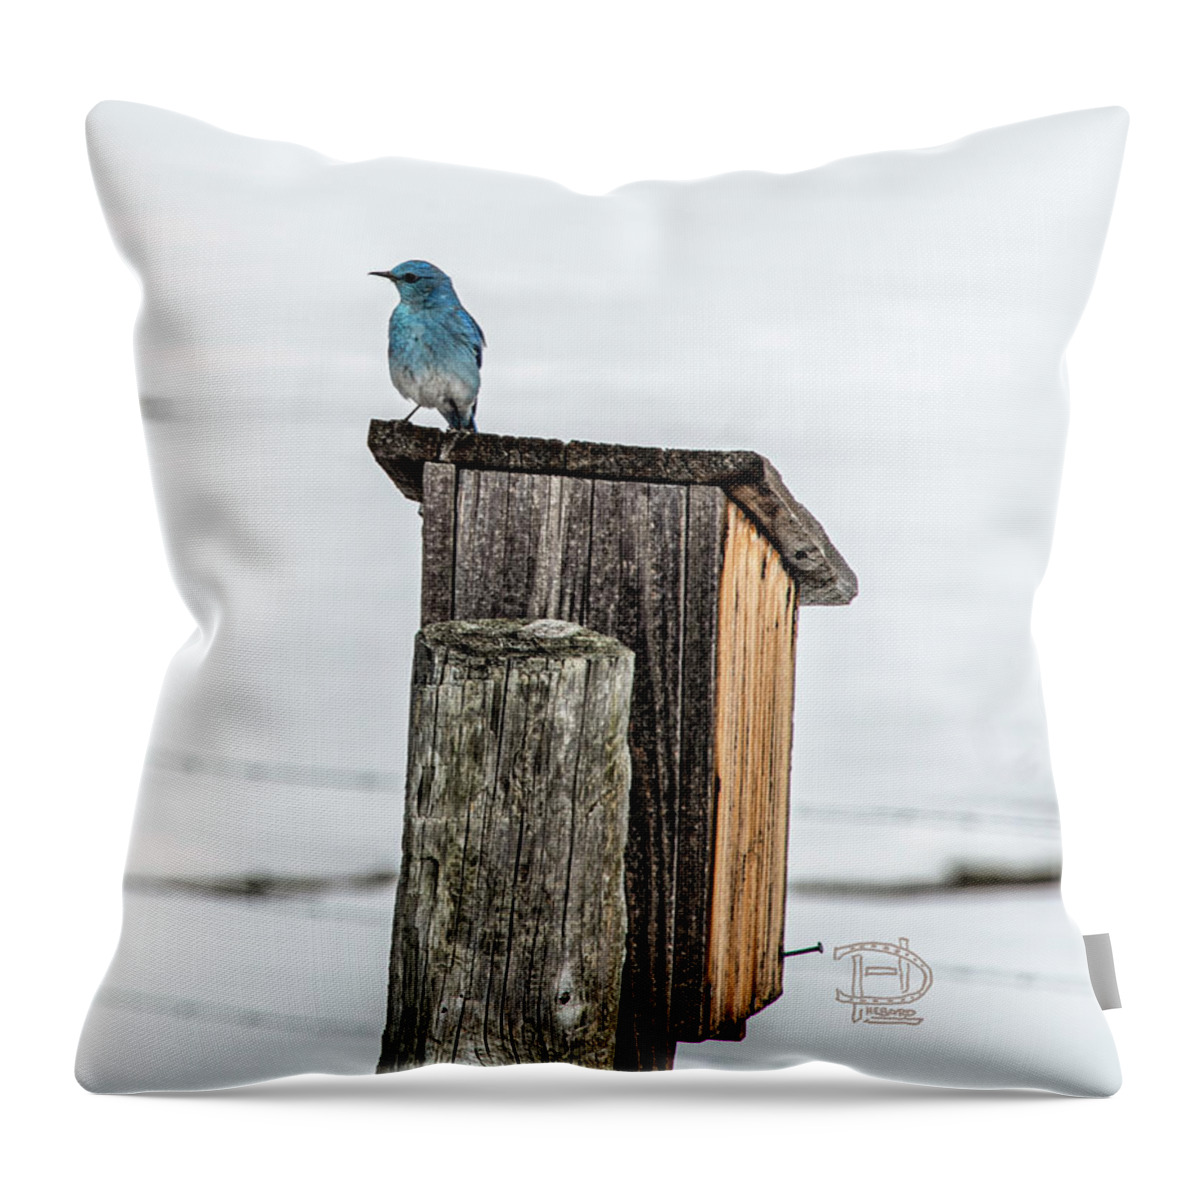 Blue Bird Throw Pillow featuring the photograph Aril 5th Blue Bird by Daniel Hebard